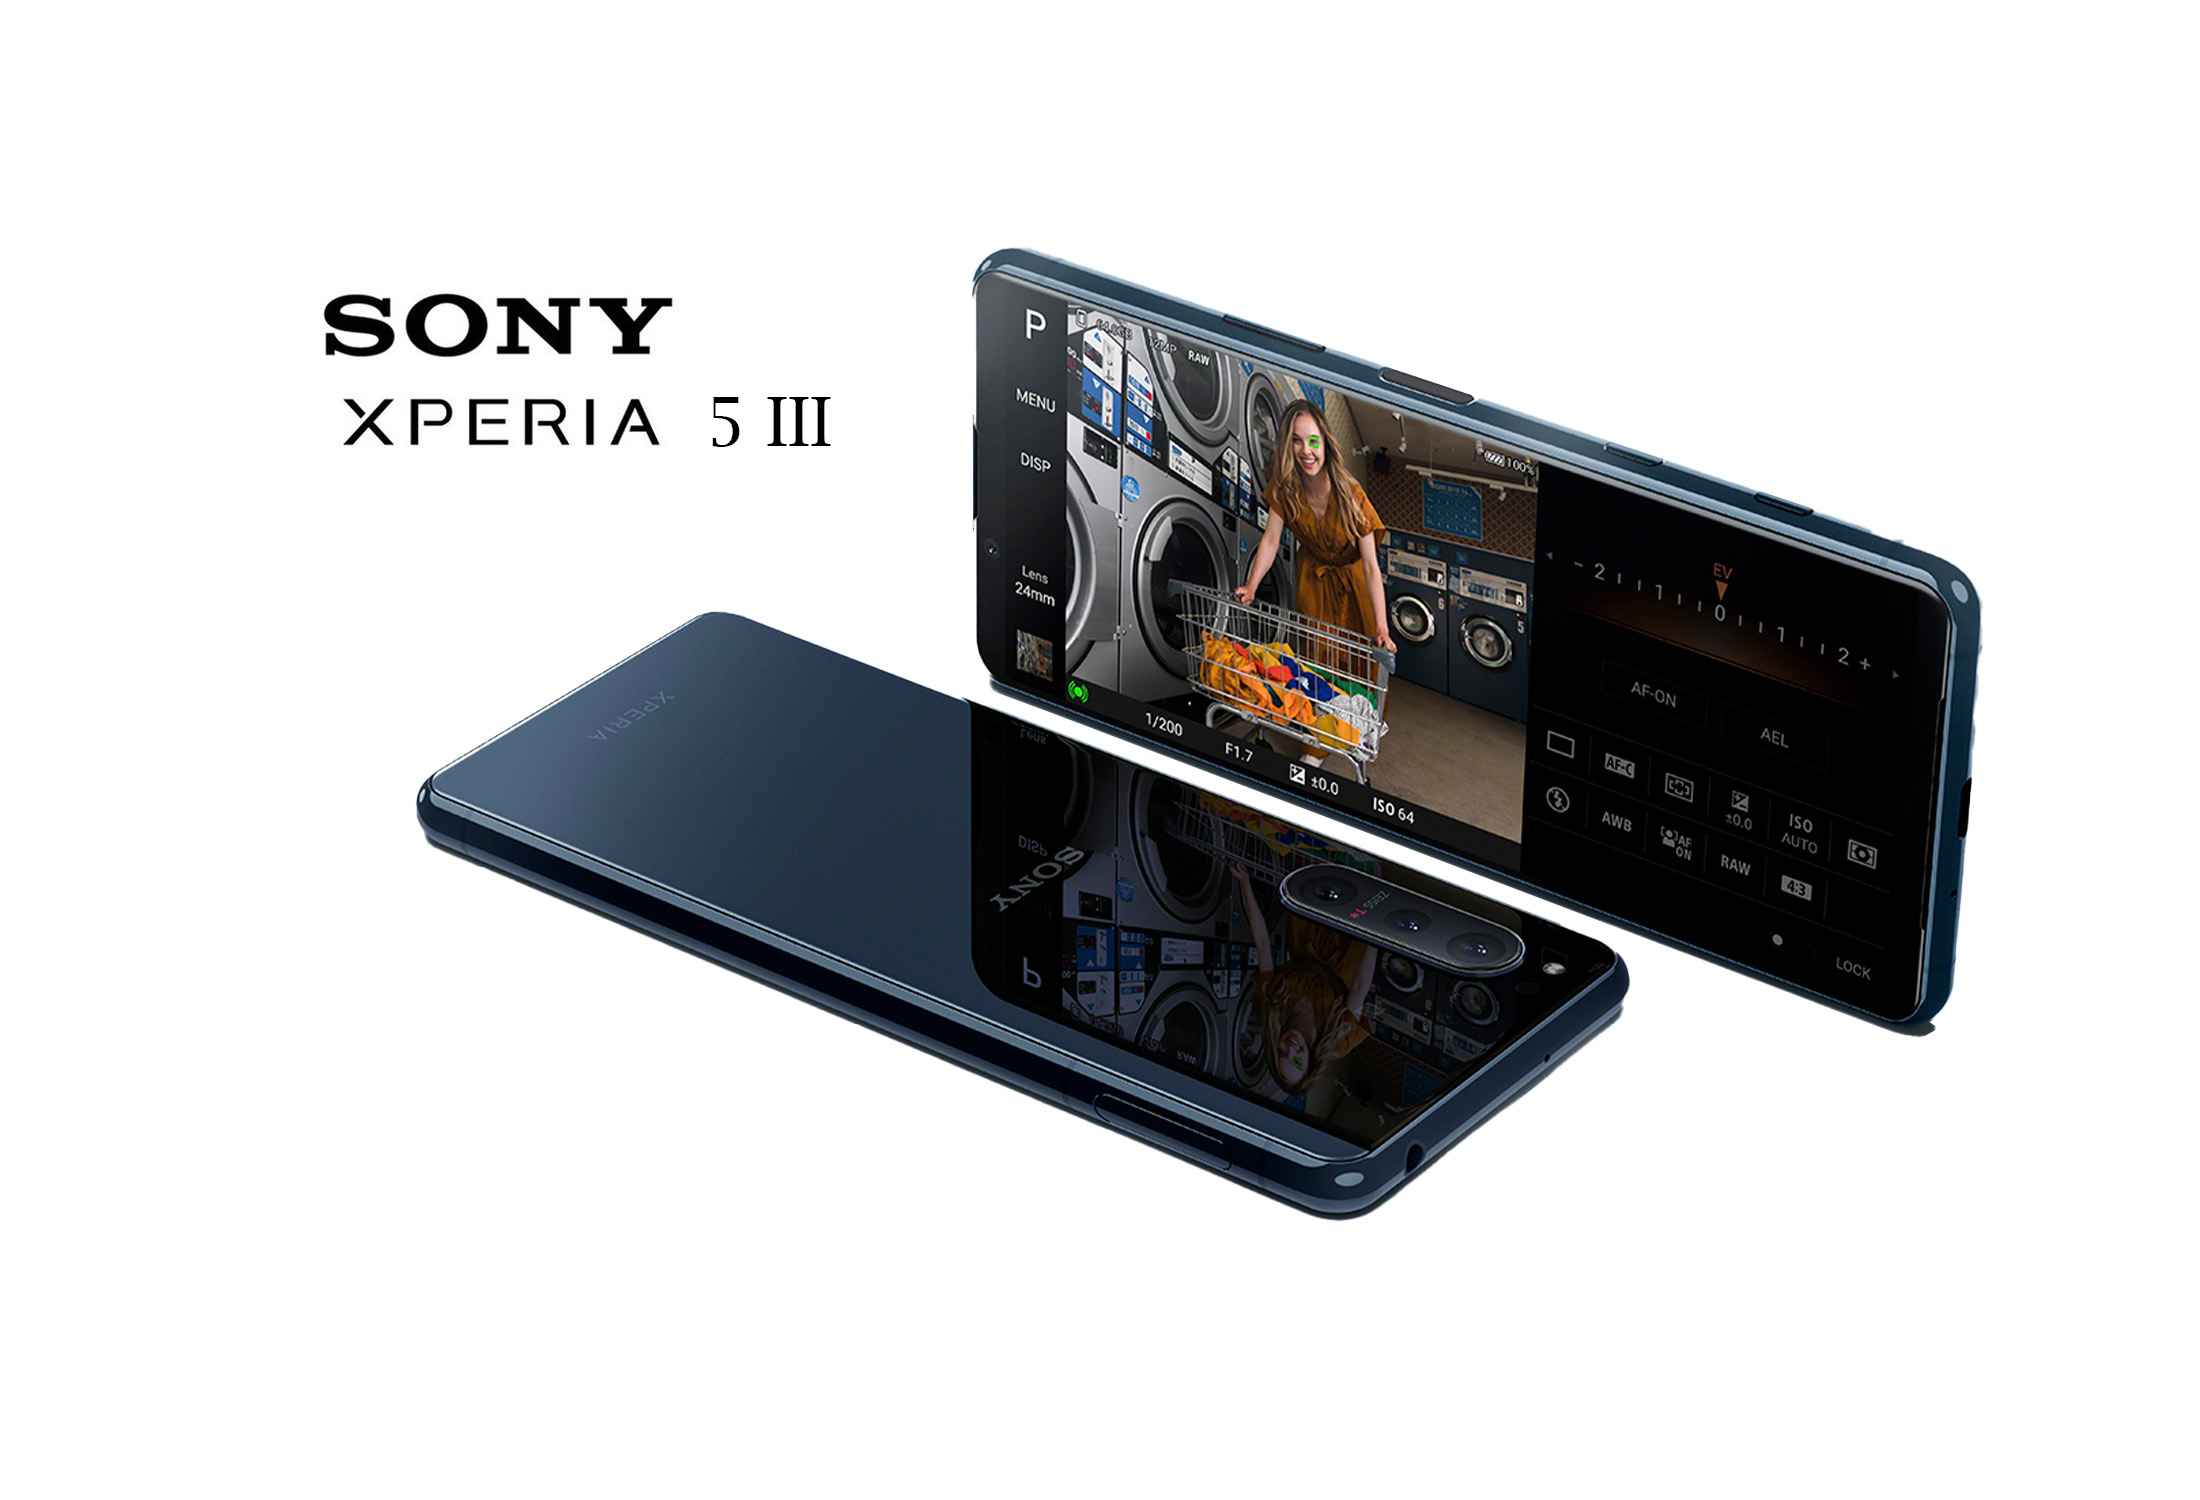 Sony Xperia 5 III Snapdragon 888 5G (5nm) Octa-Core CPU